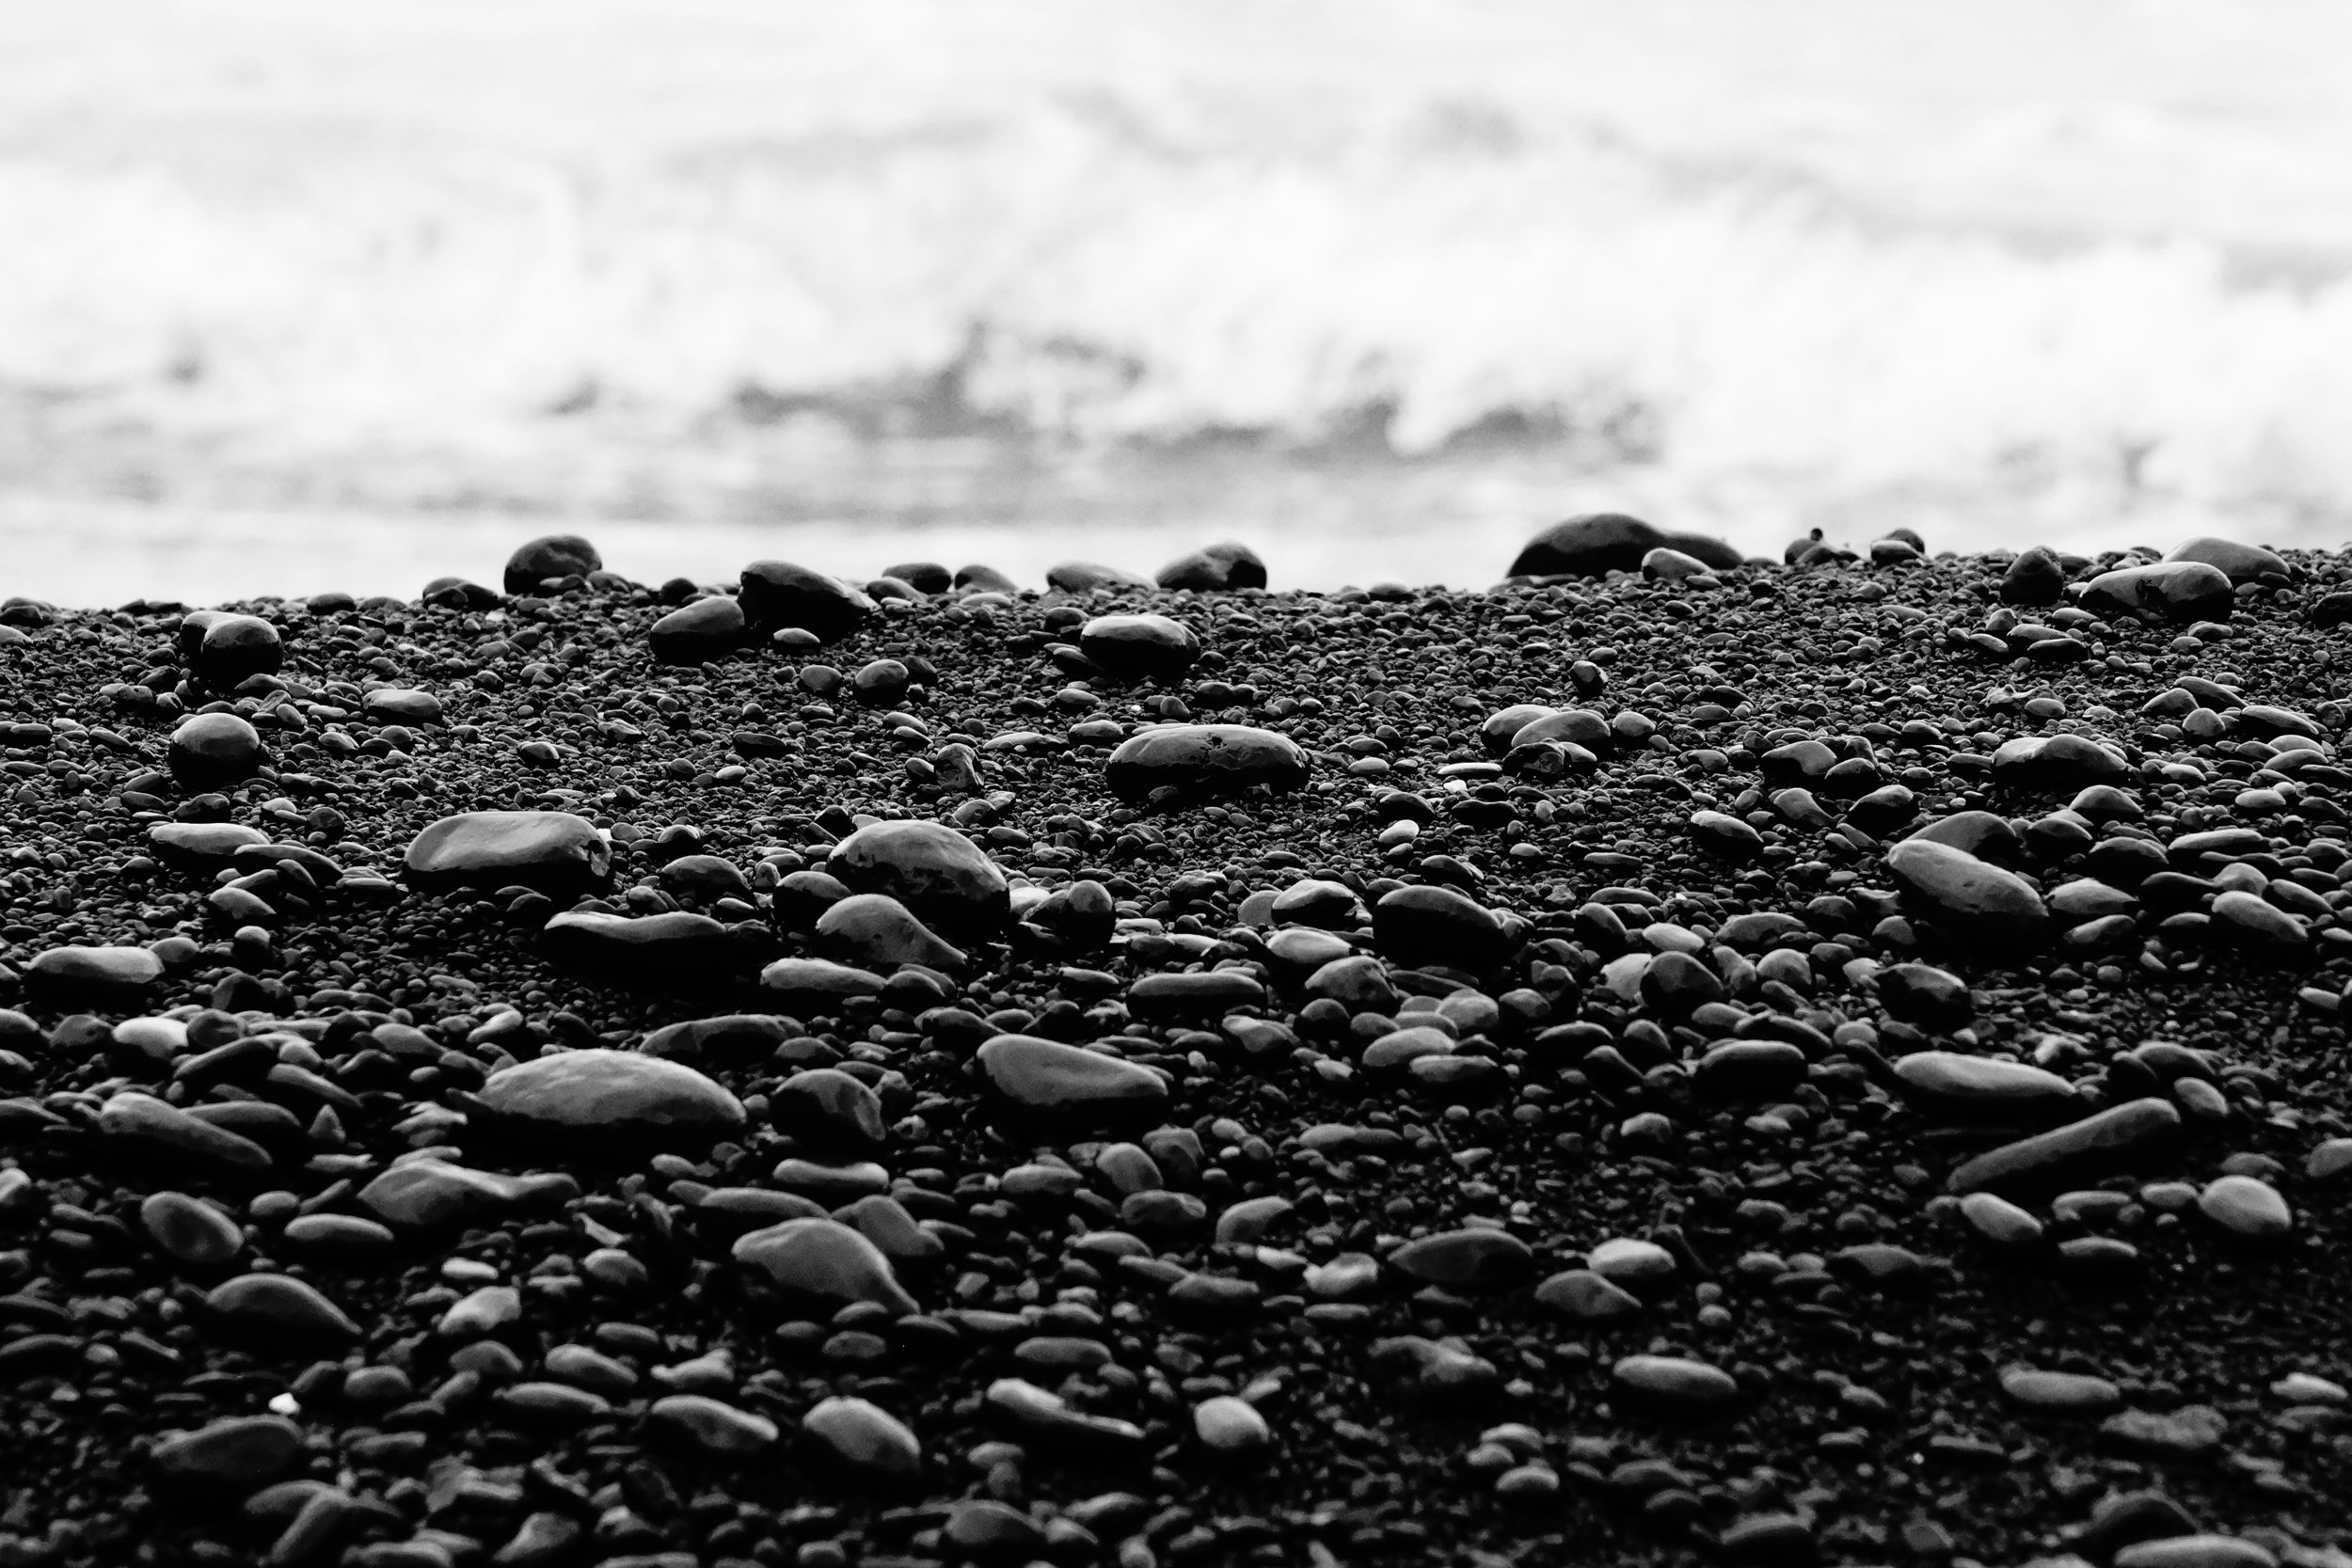 Maui-Beach-Black-Sand-1.0.jpg